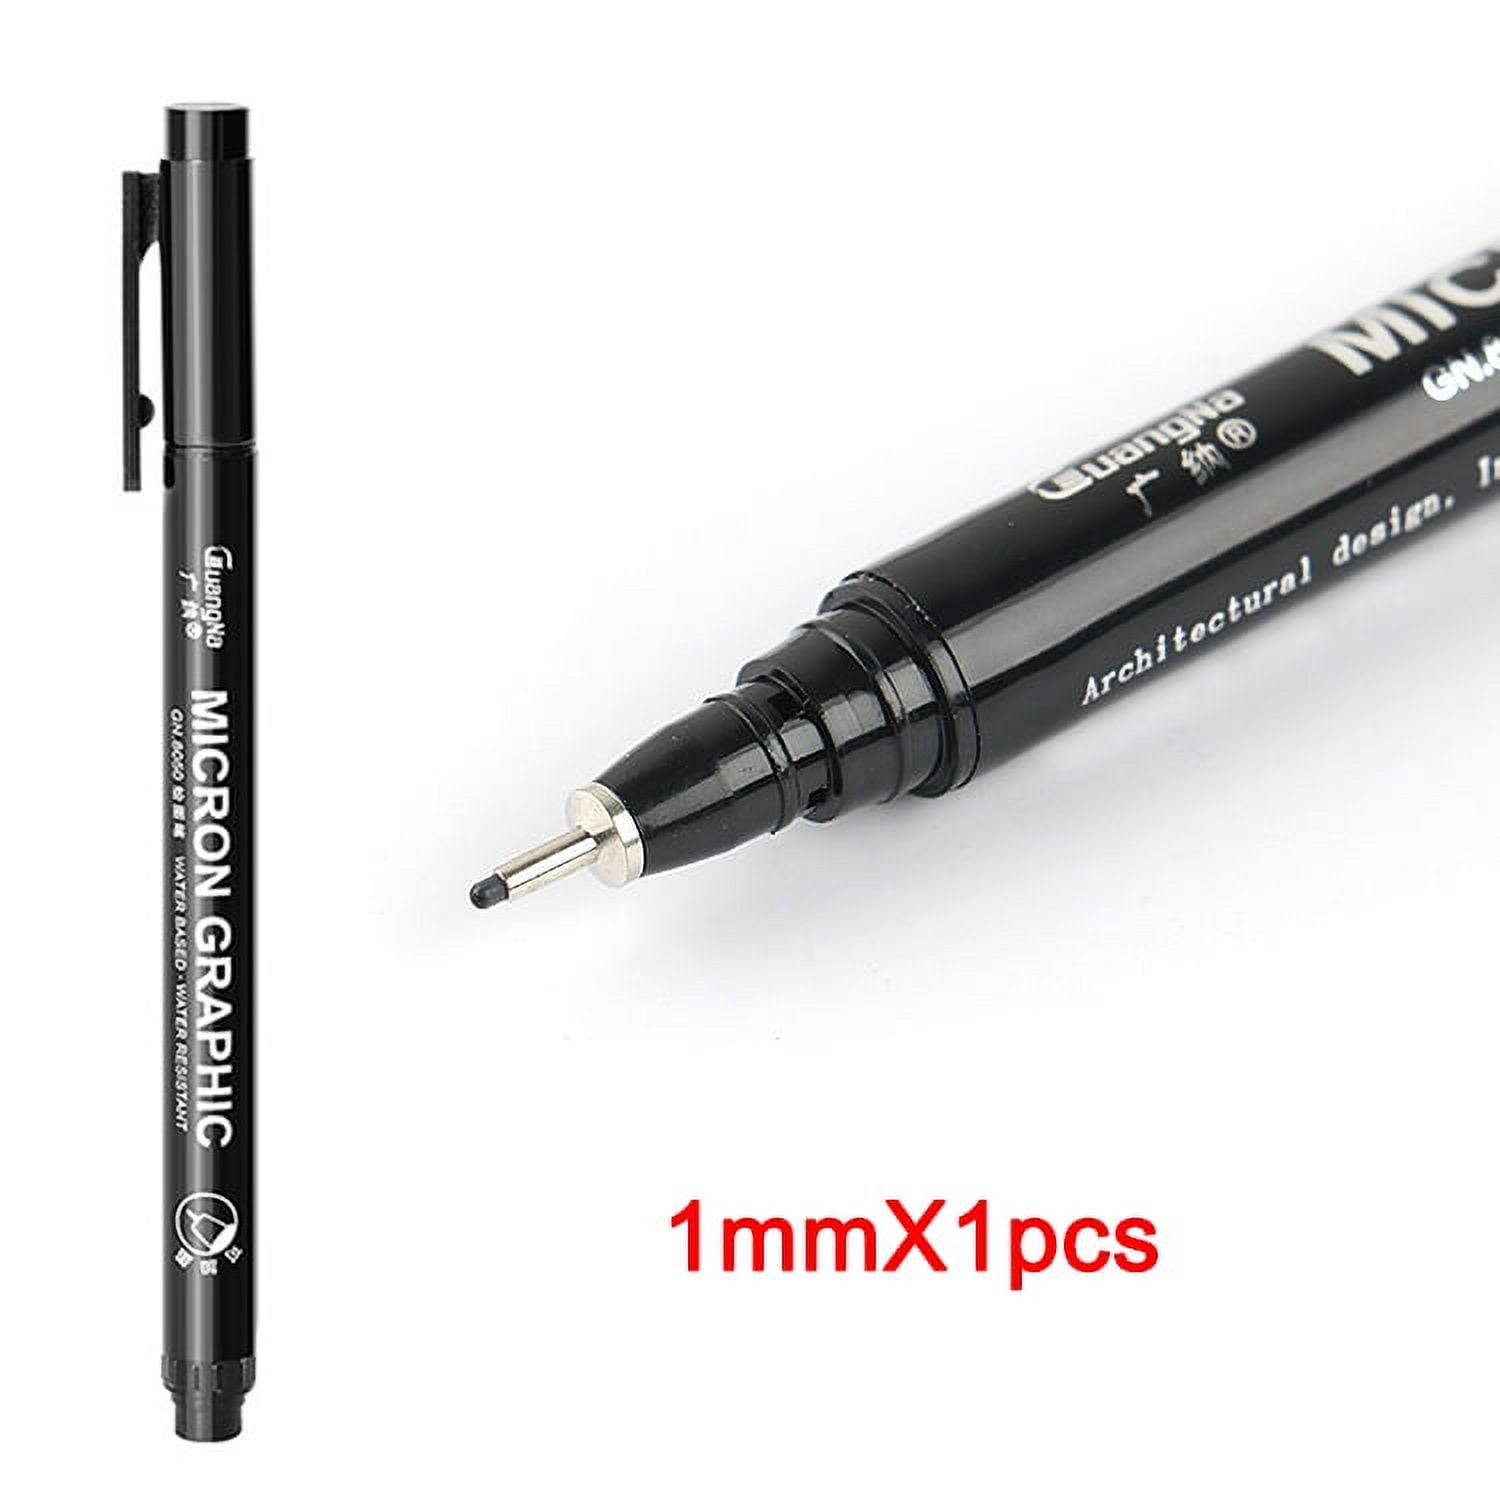  Mr. Pen- Black Fineliners, 0.25mm, 4 Pack, Bible Pens